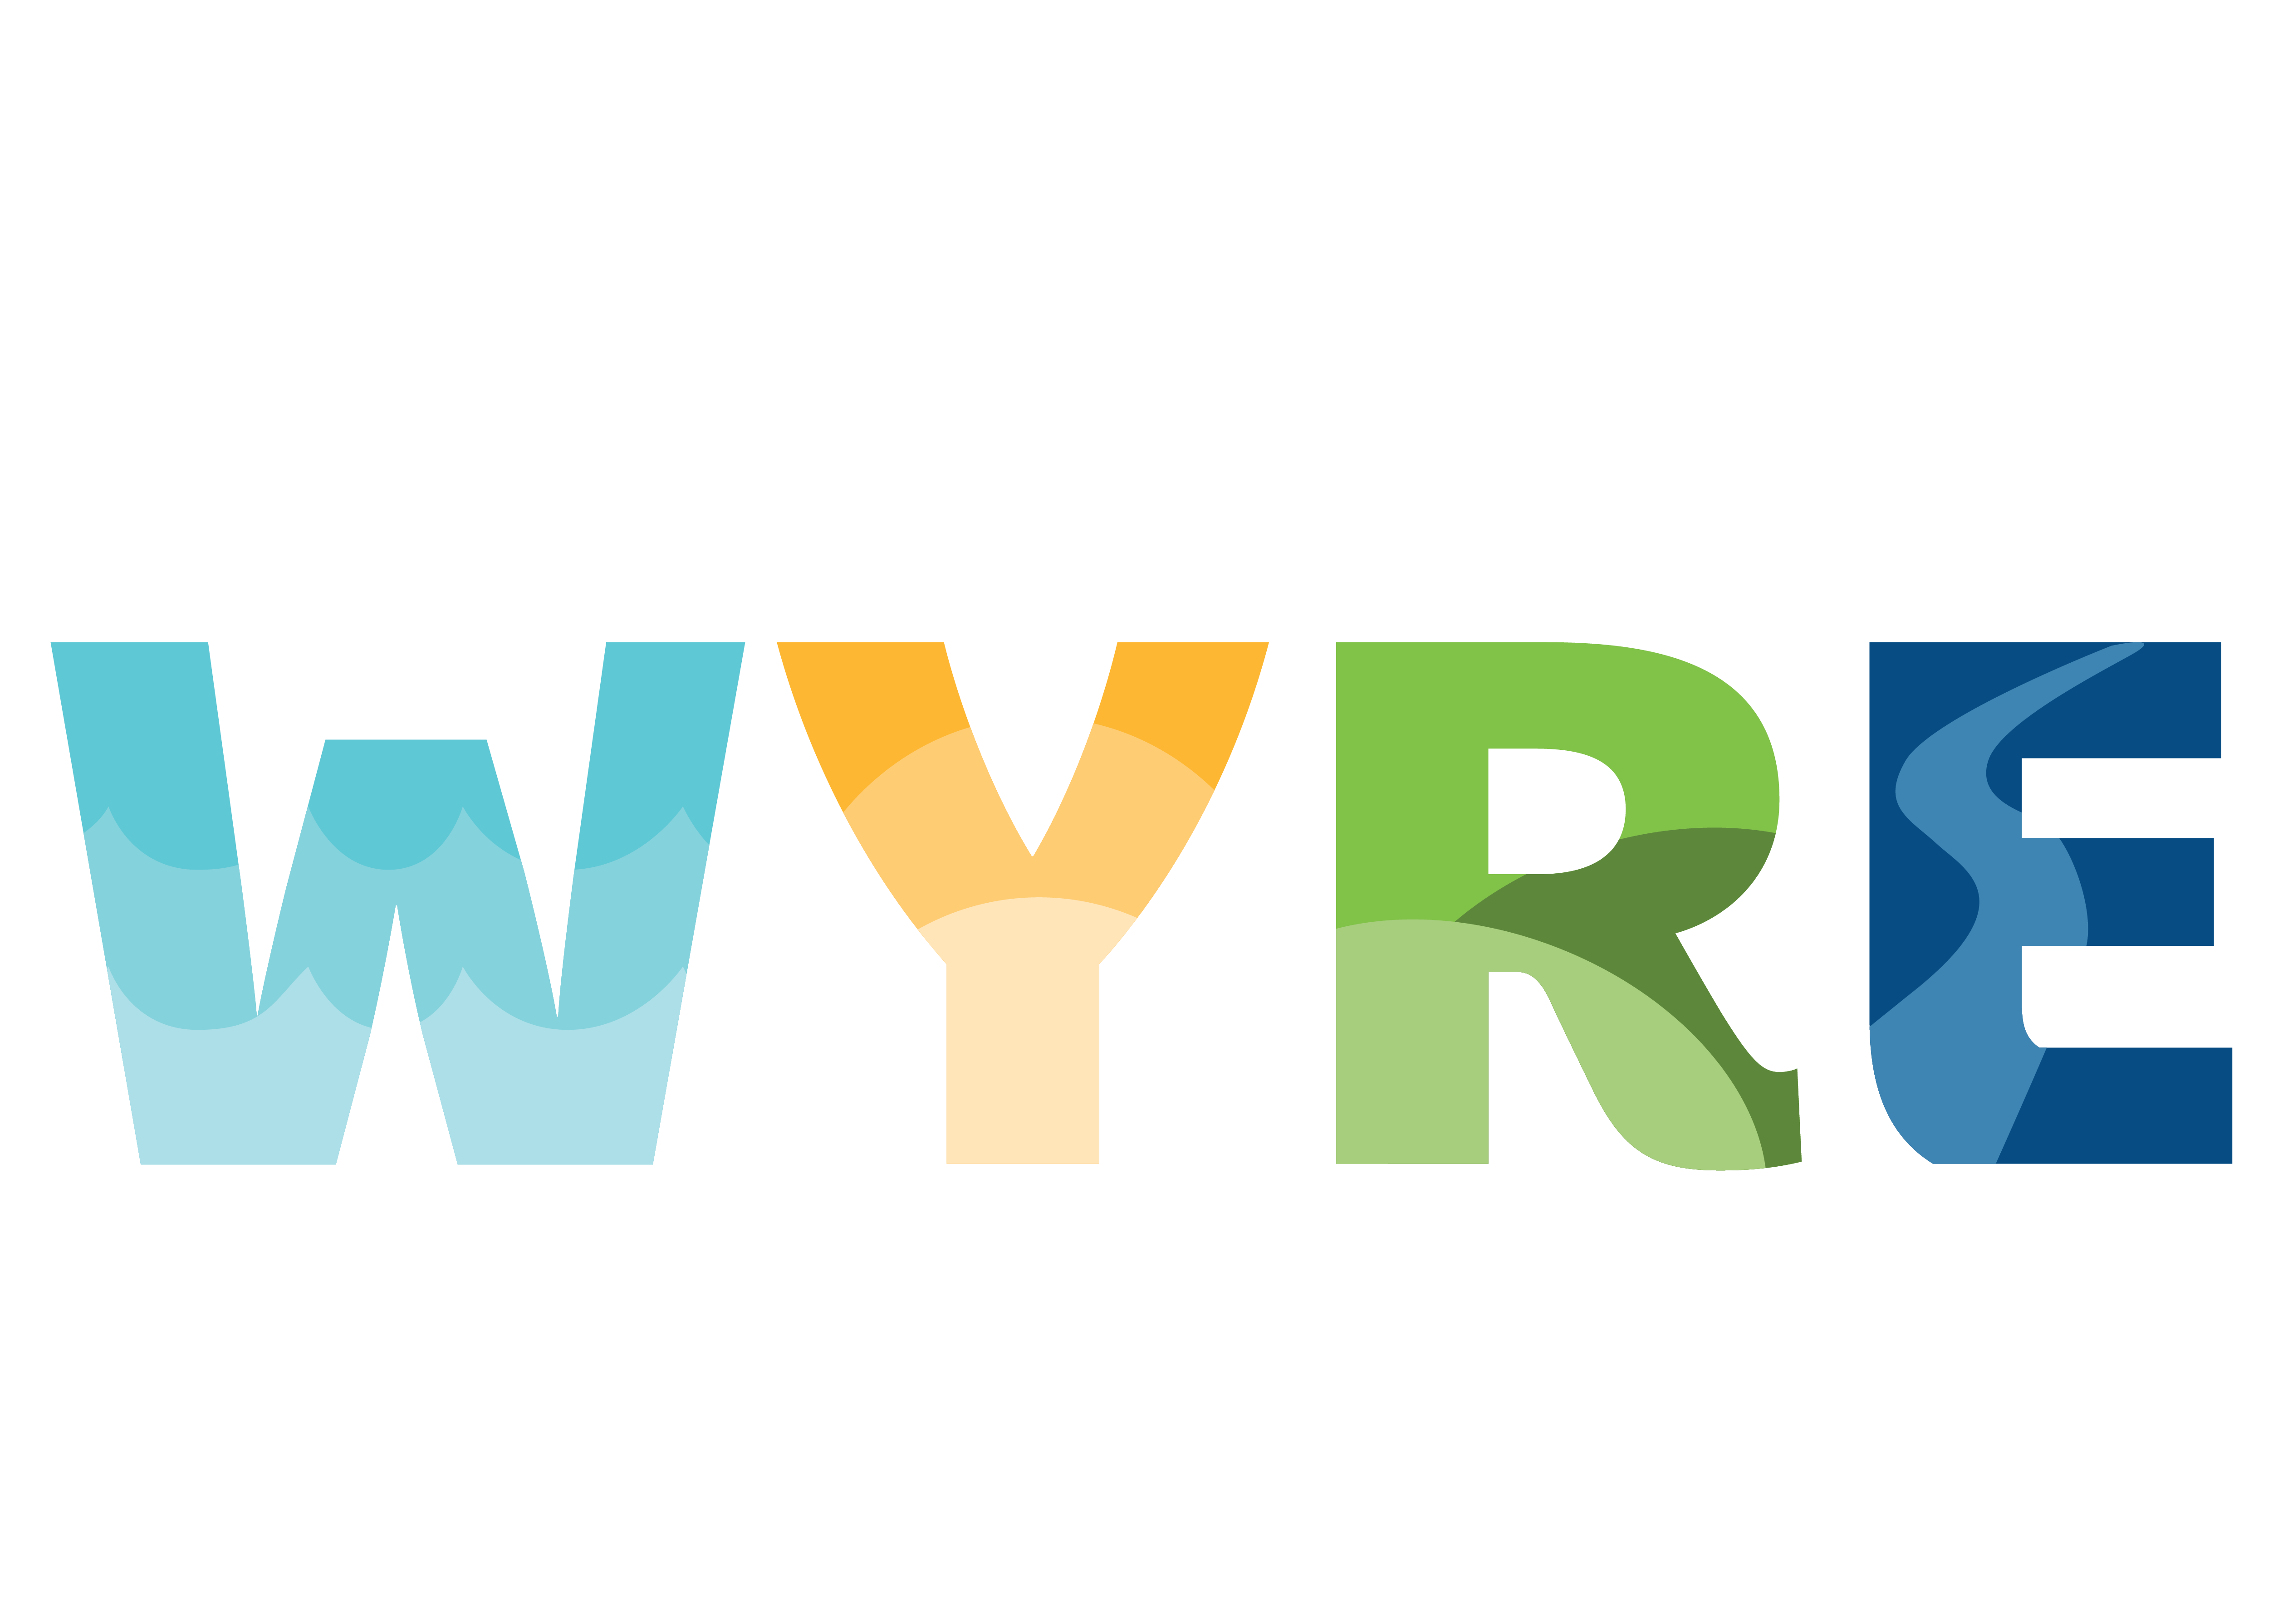 Discover Wyre logo